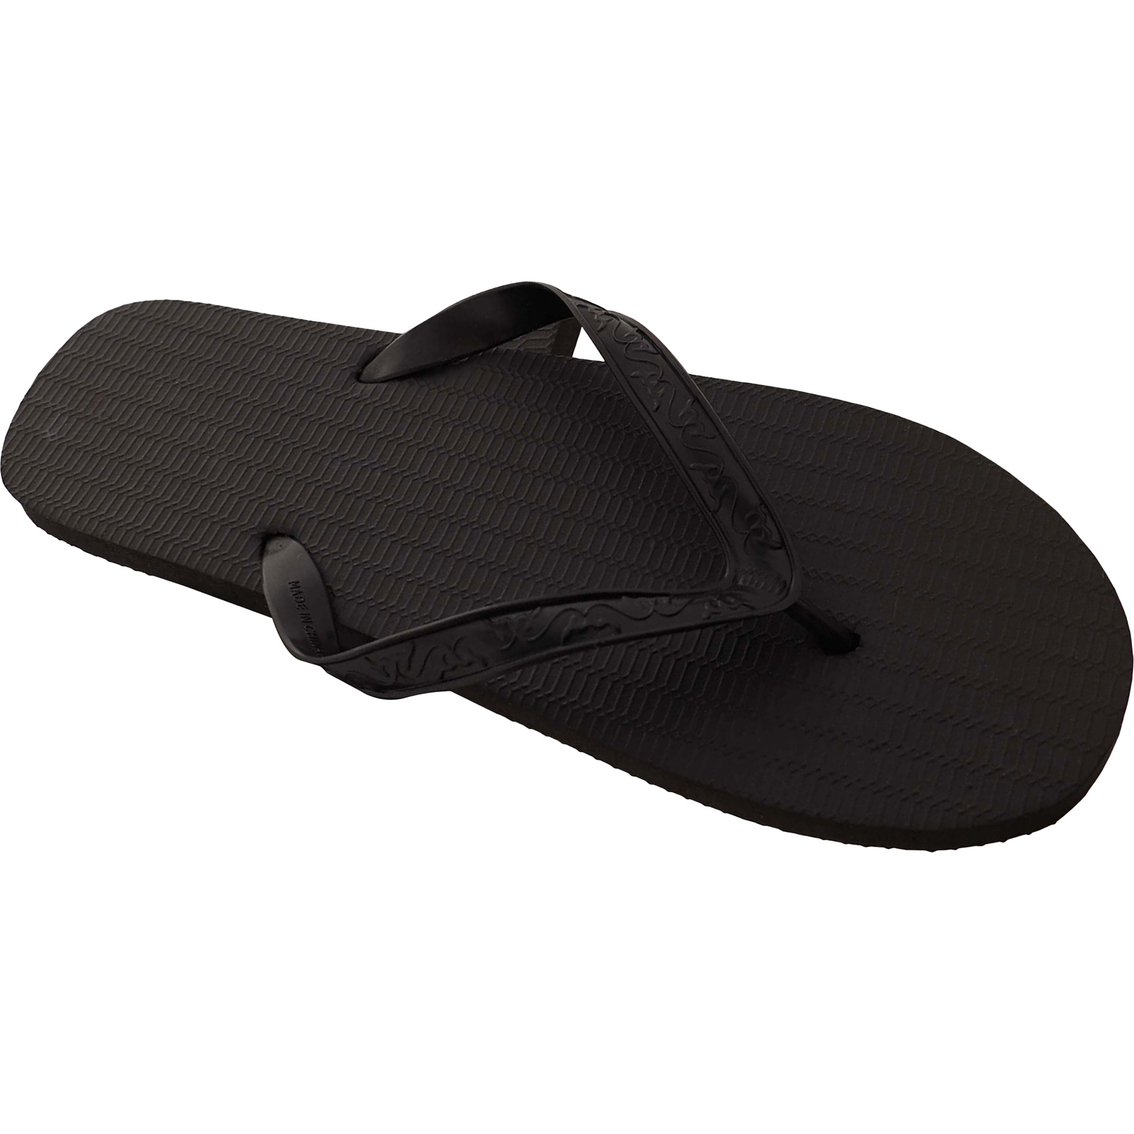 Brigade Qm Traditional Flip Flop Shower Sandals | Sandals & Flip Flops ...